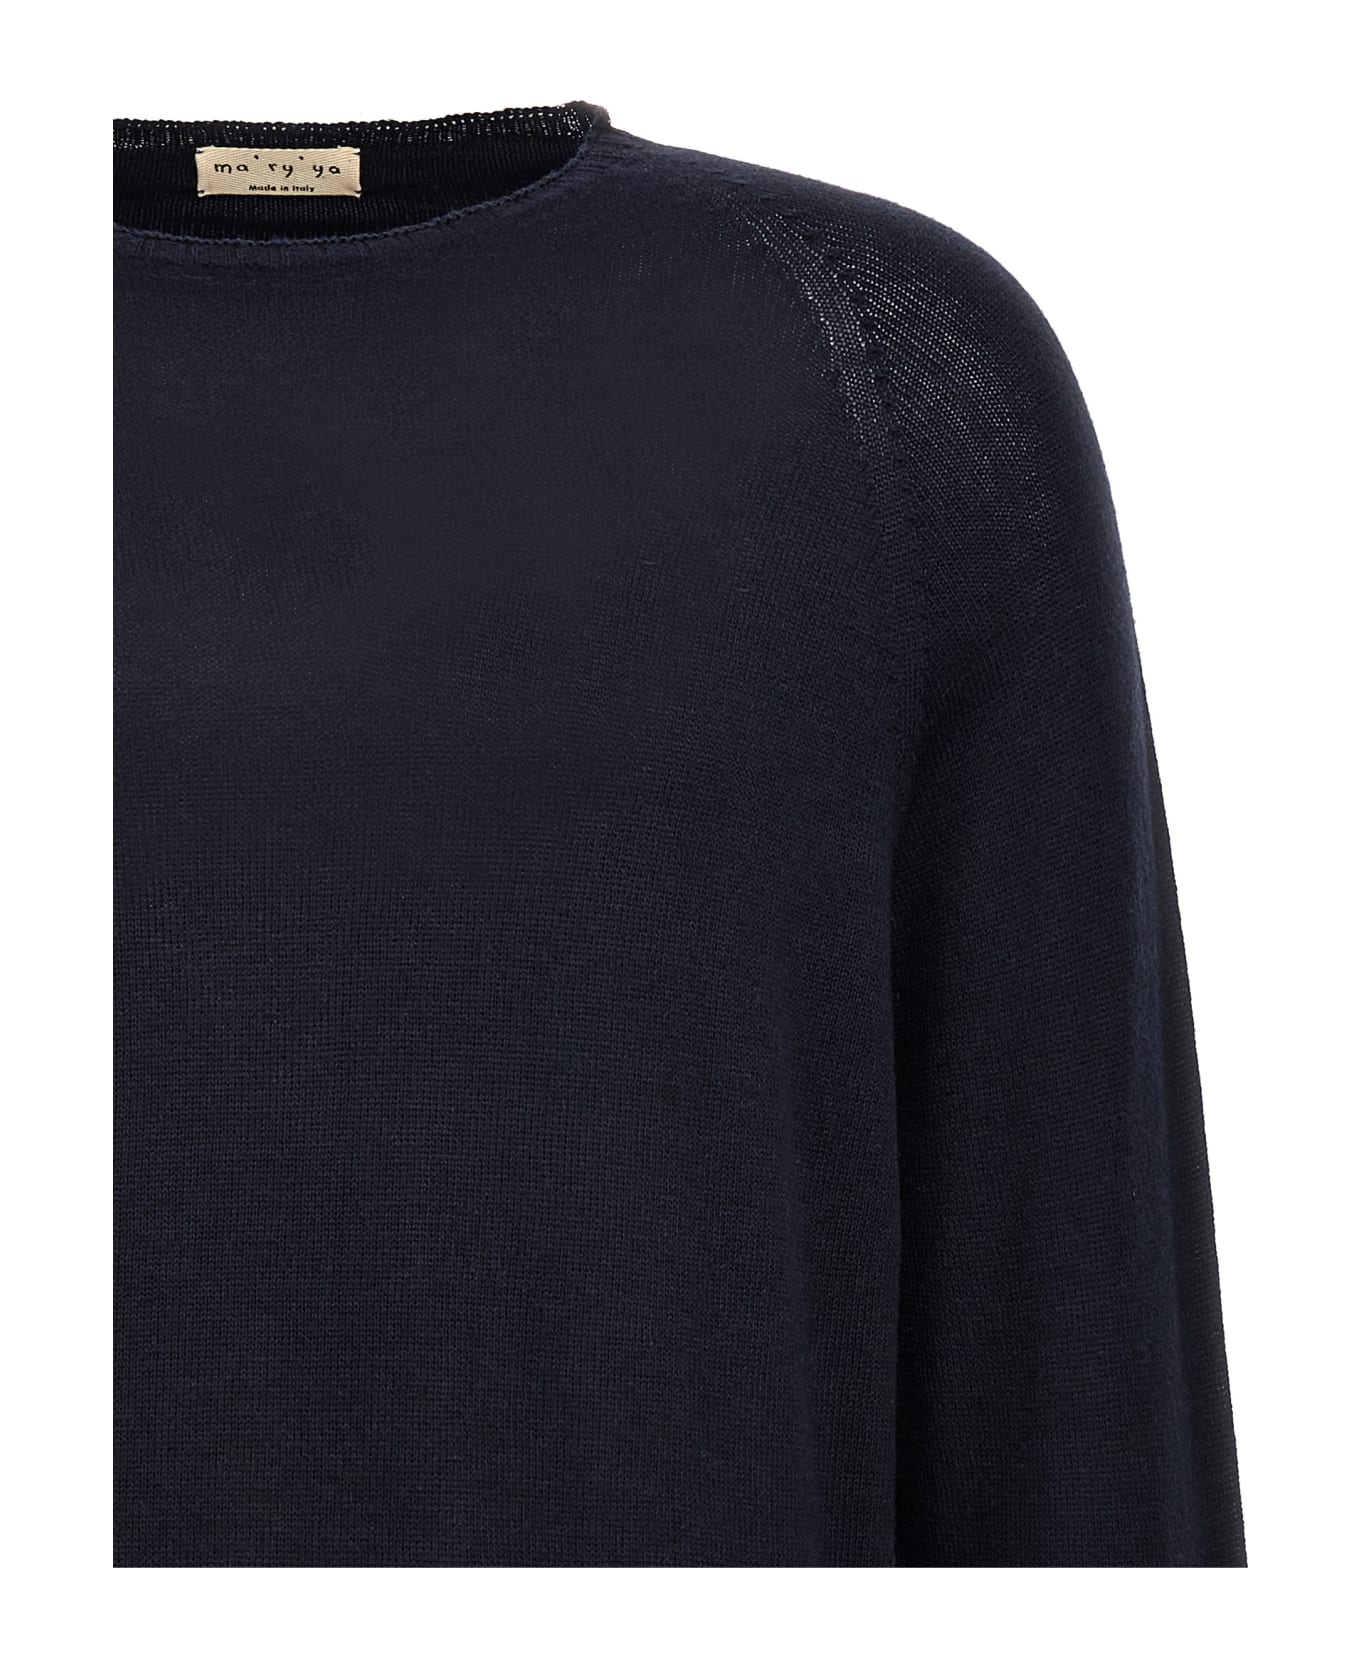 Ma'ry'ya Crew-neck Sweater - Blue ニットウェア